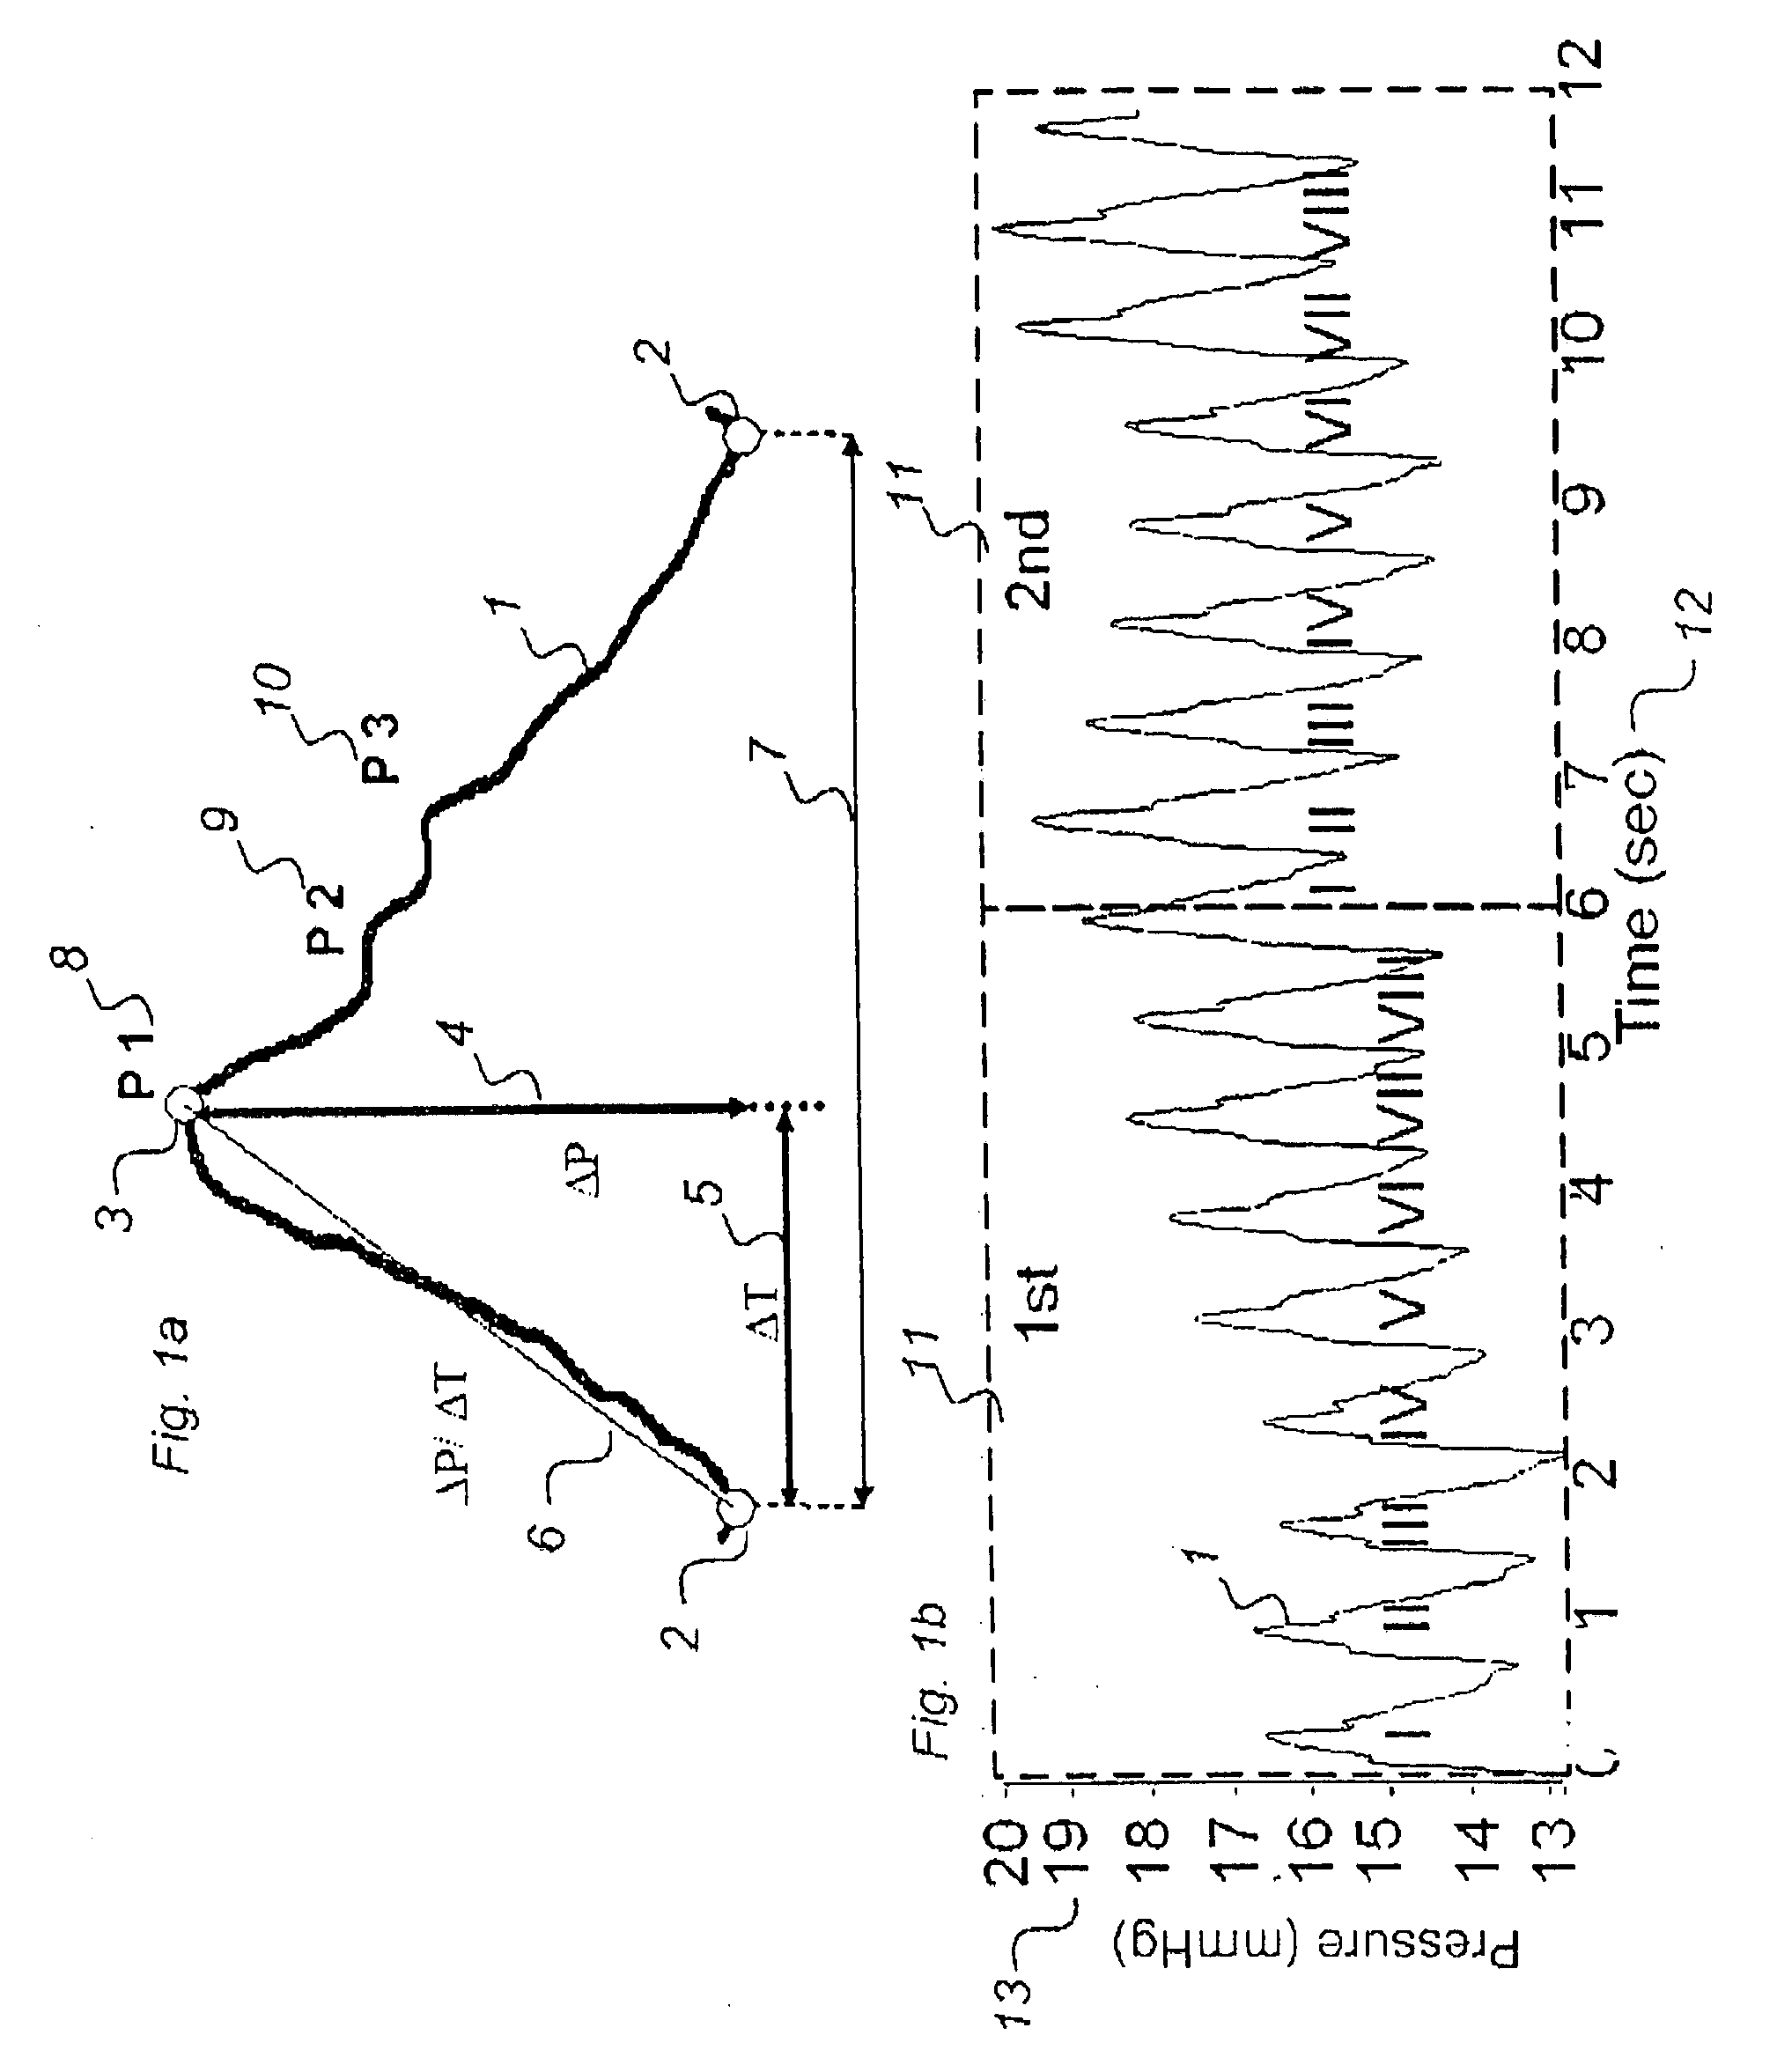 Method for analysis of single pulse pressure waves